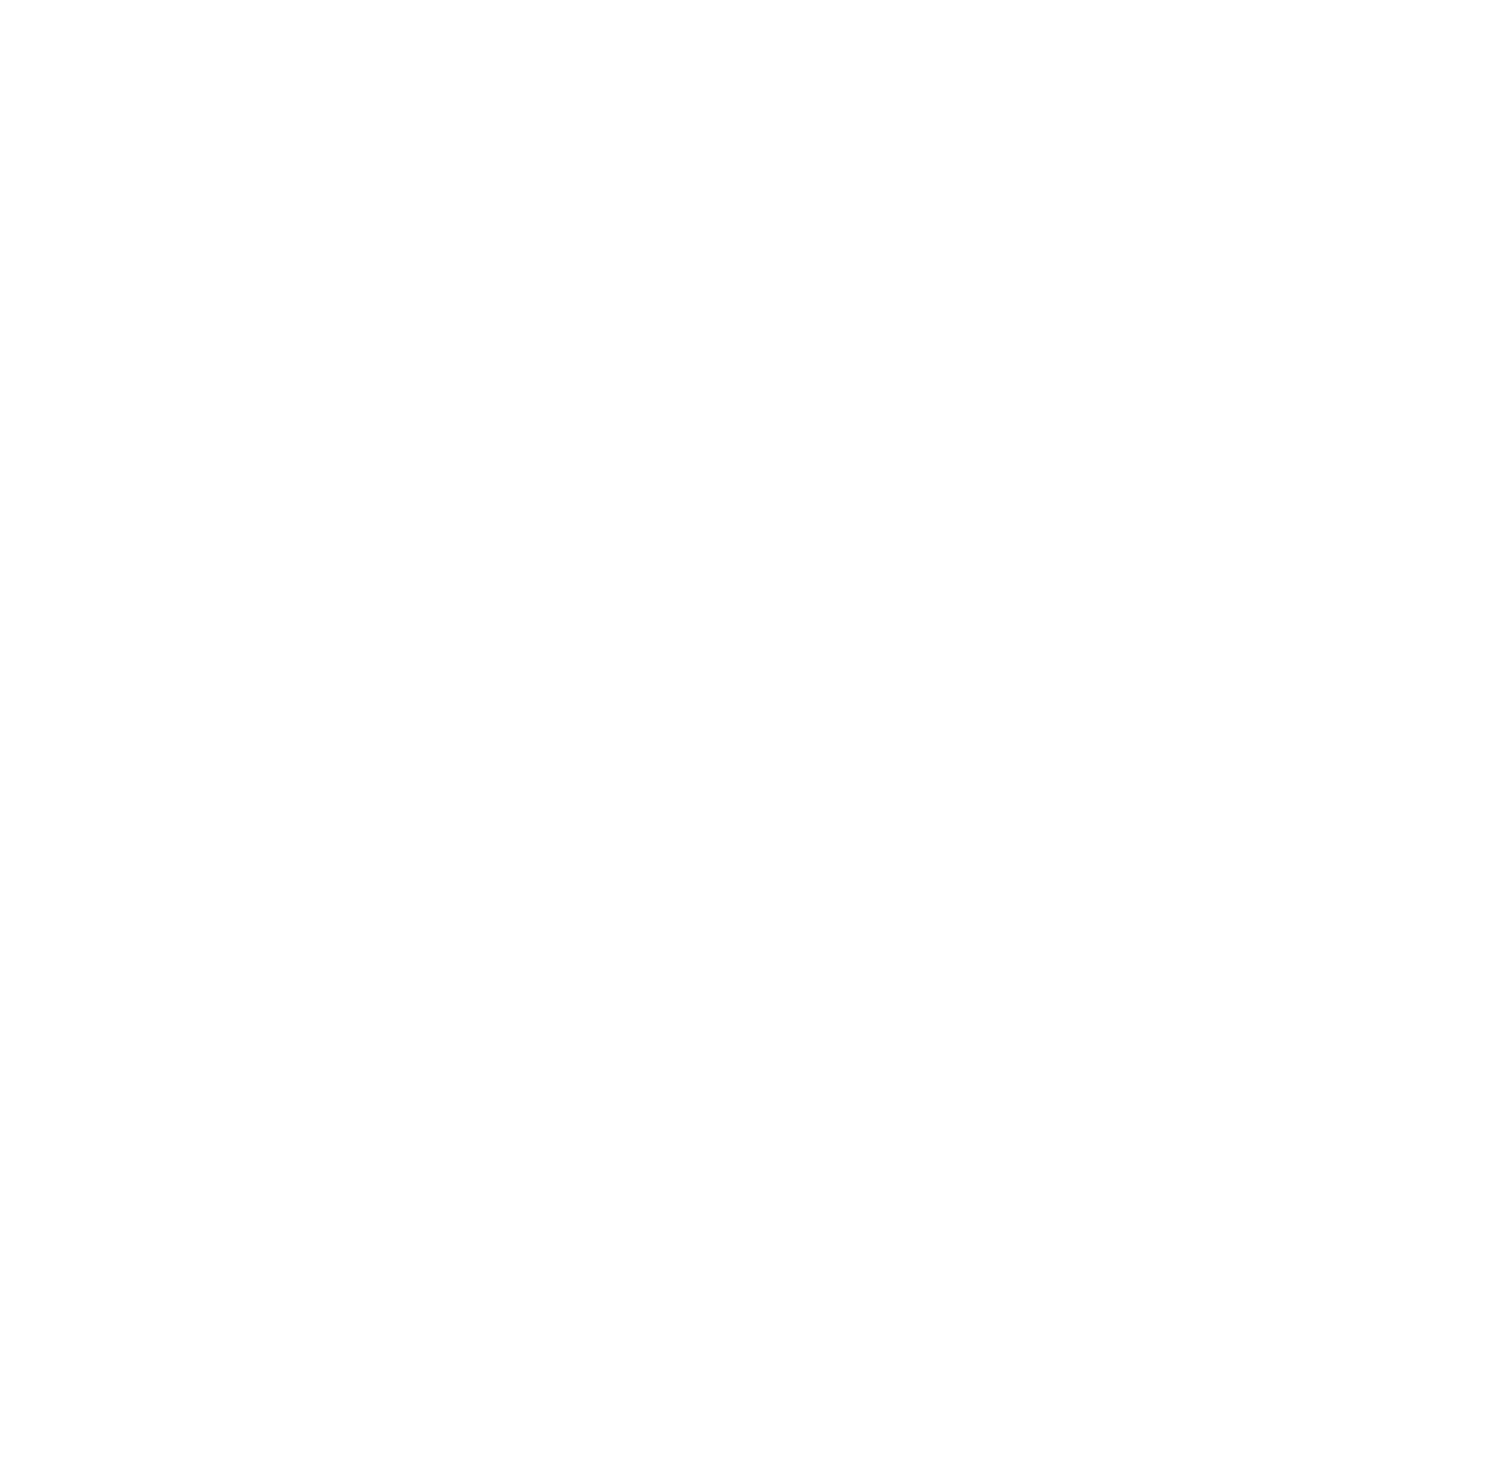 NKS Photo/Designs